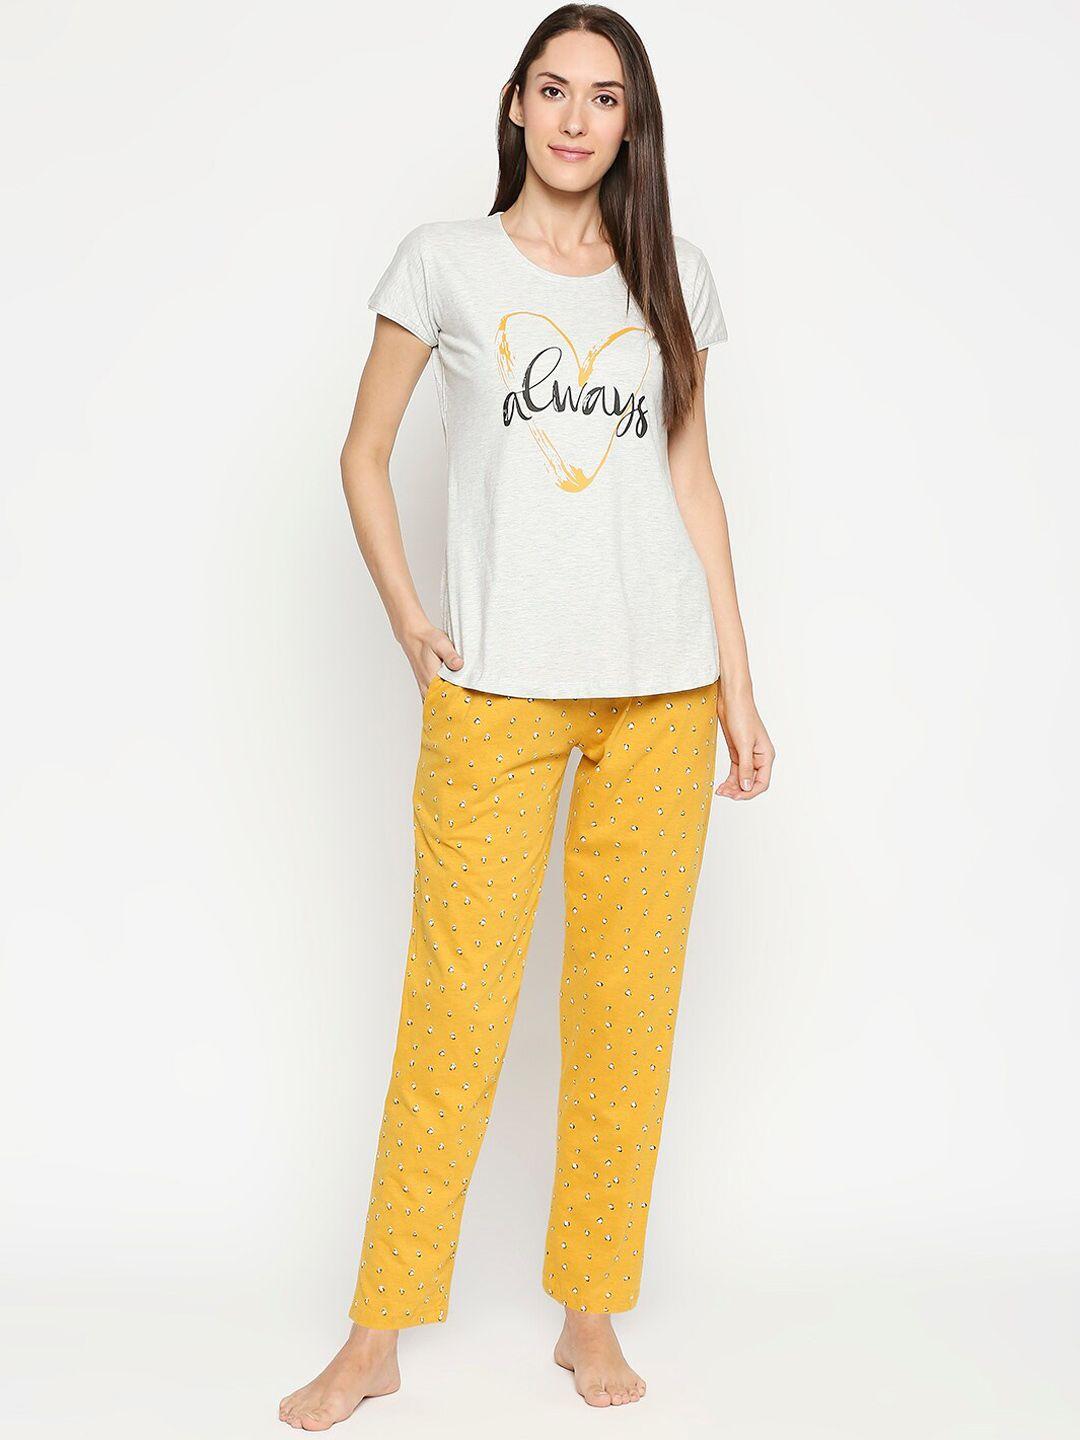 av2-women-yellow-&-grey-melange-printed-night-suit